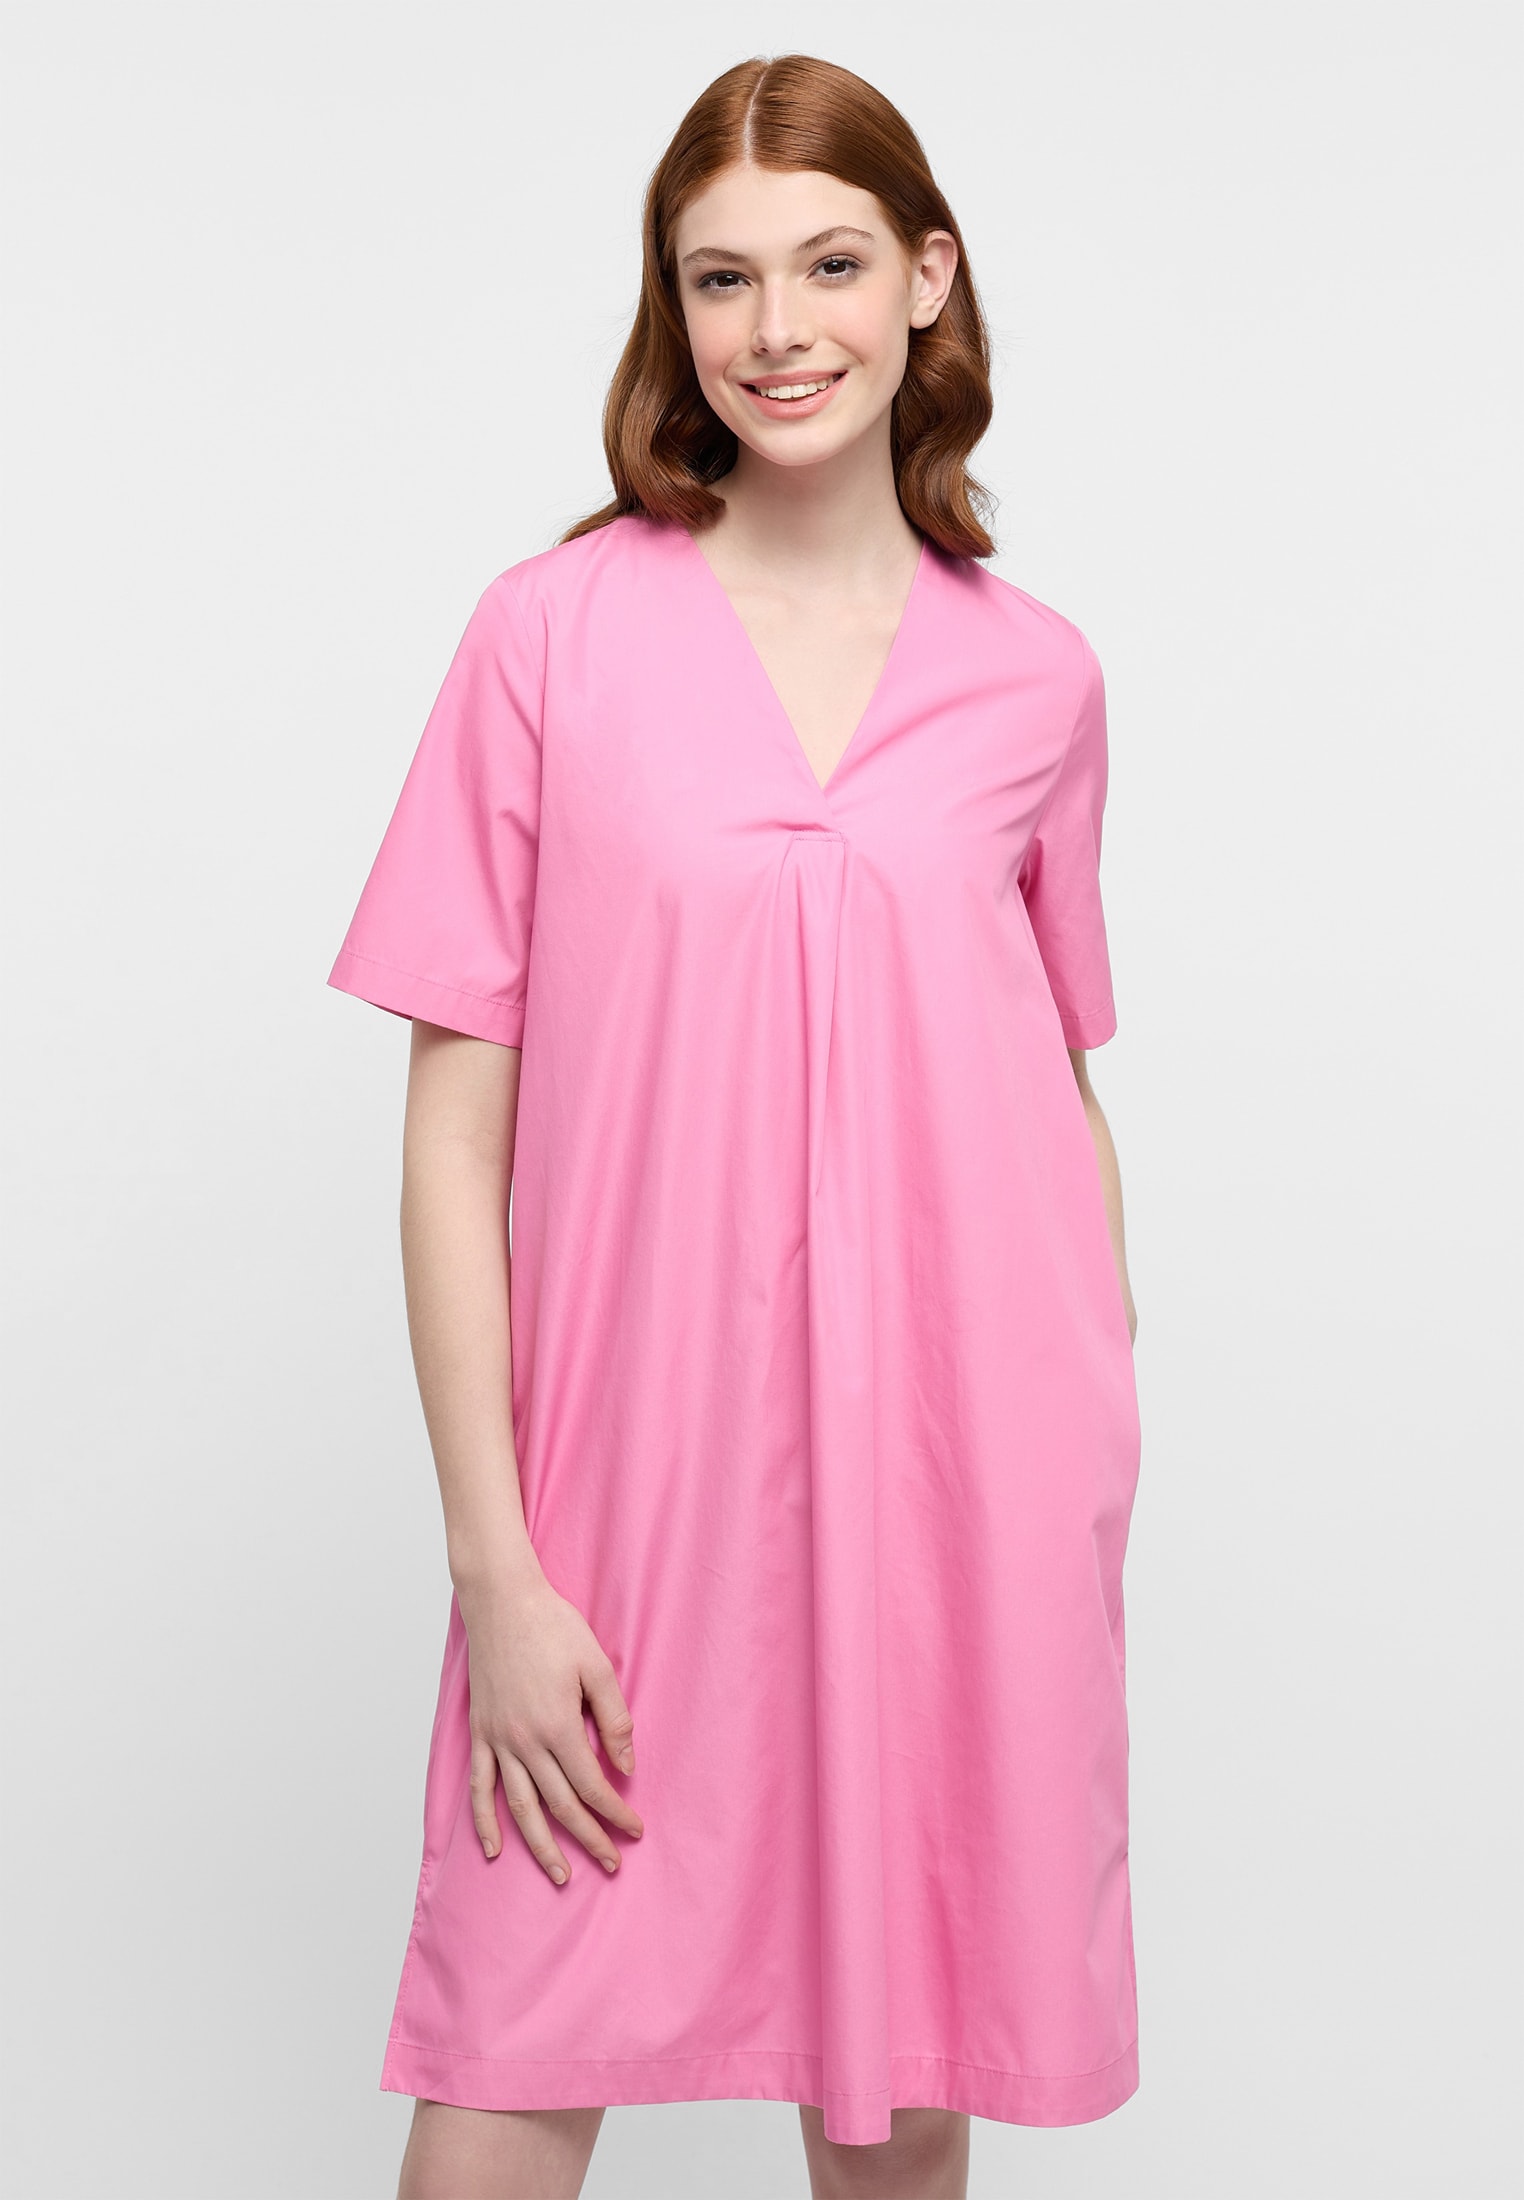 short | | | Shirt pink sleeve | plain 2DR00211-15-21-34-1/2 in dress pink 34